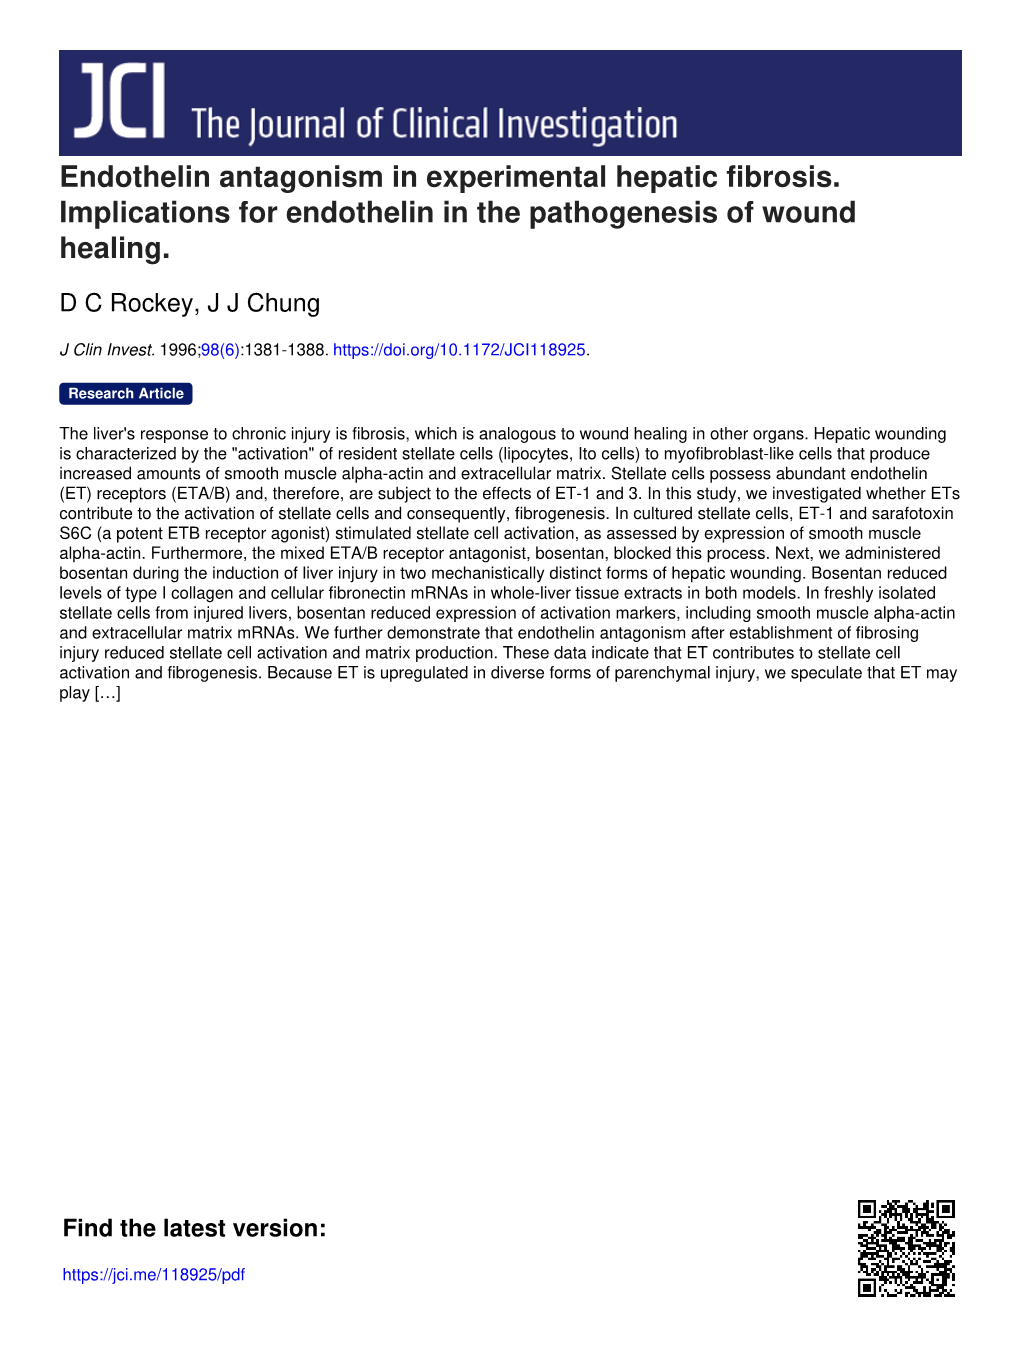 Endothelin Antagonism in Experimental Hepatic Fibrosis